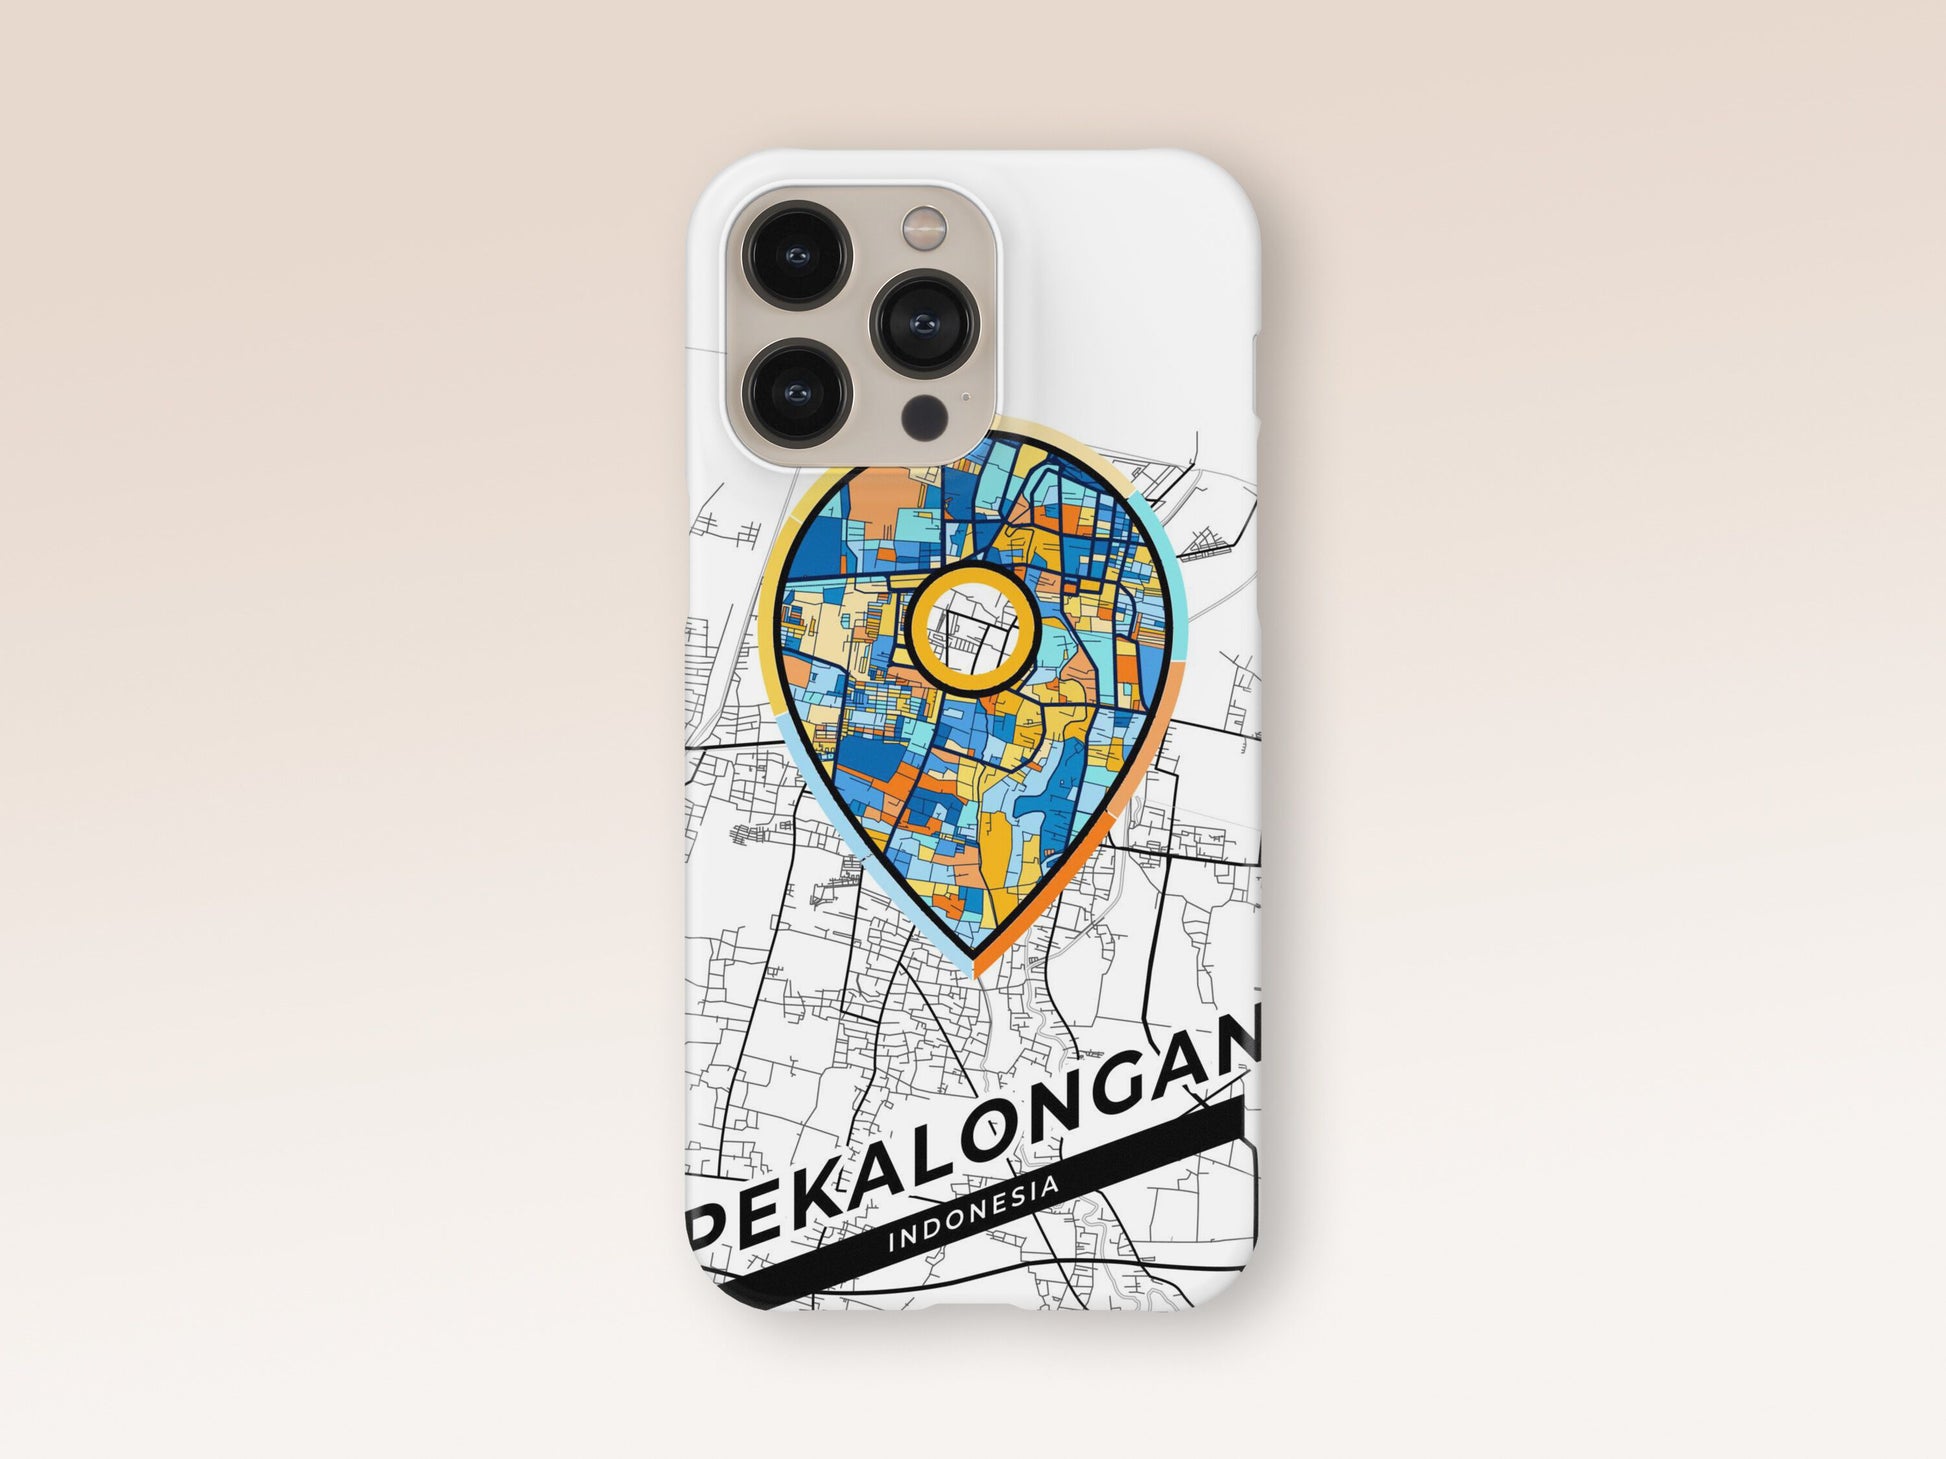 Pekalongan Indonesia slim phone case with colorful icon 1